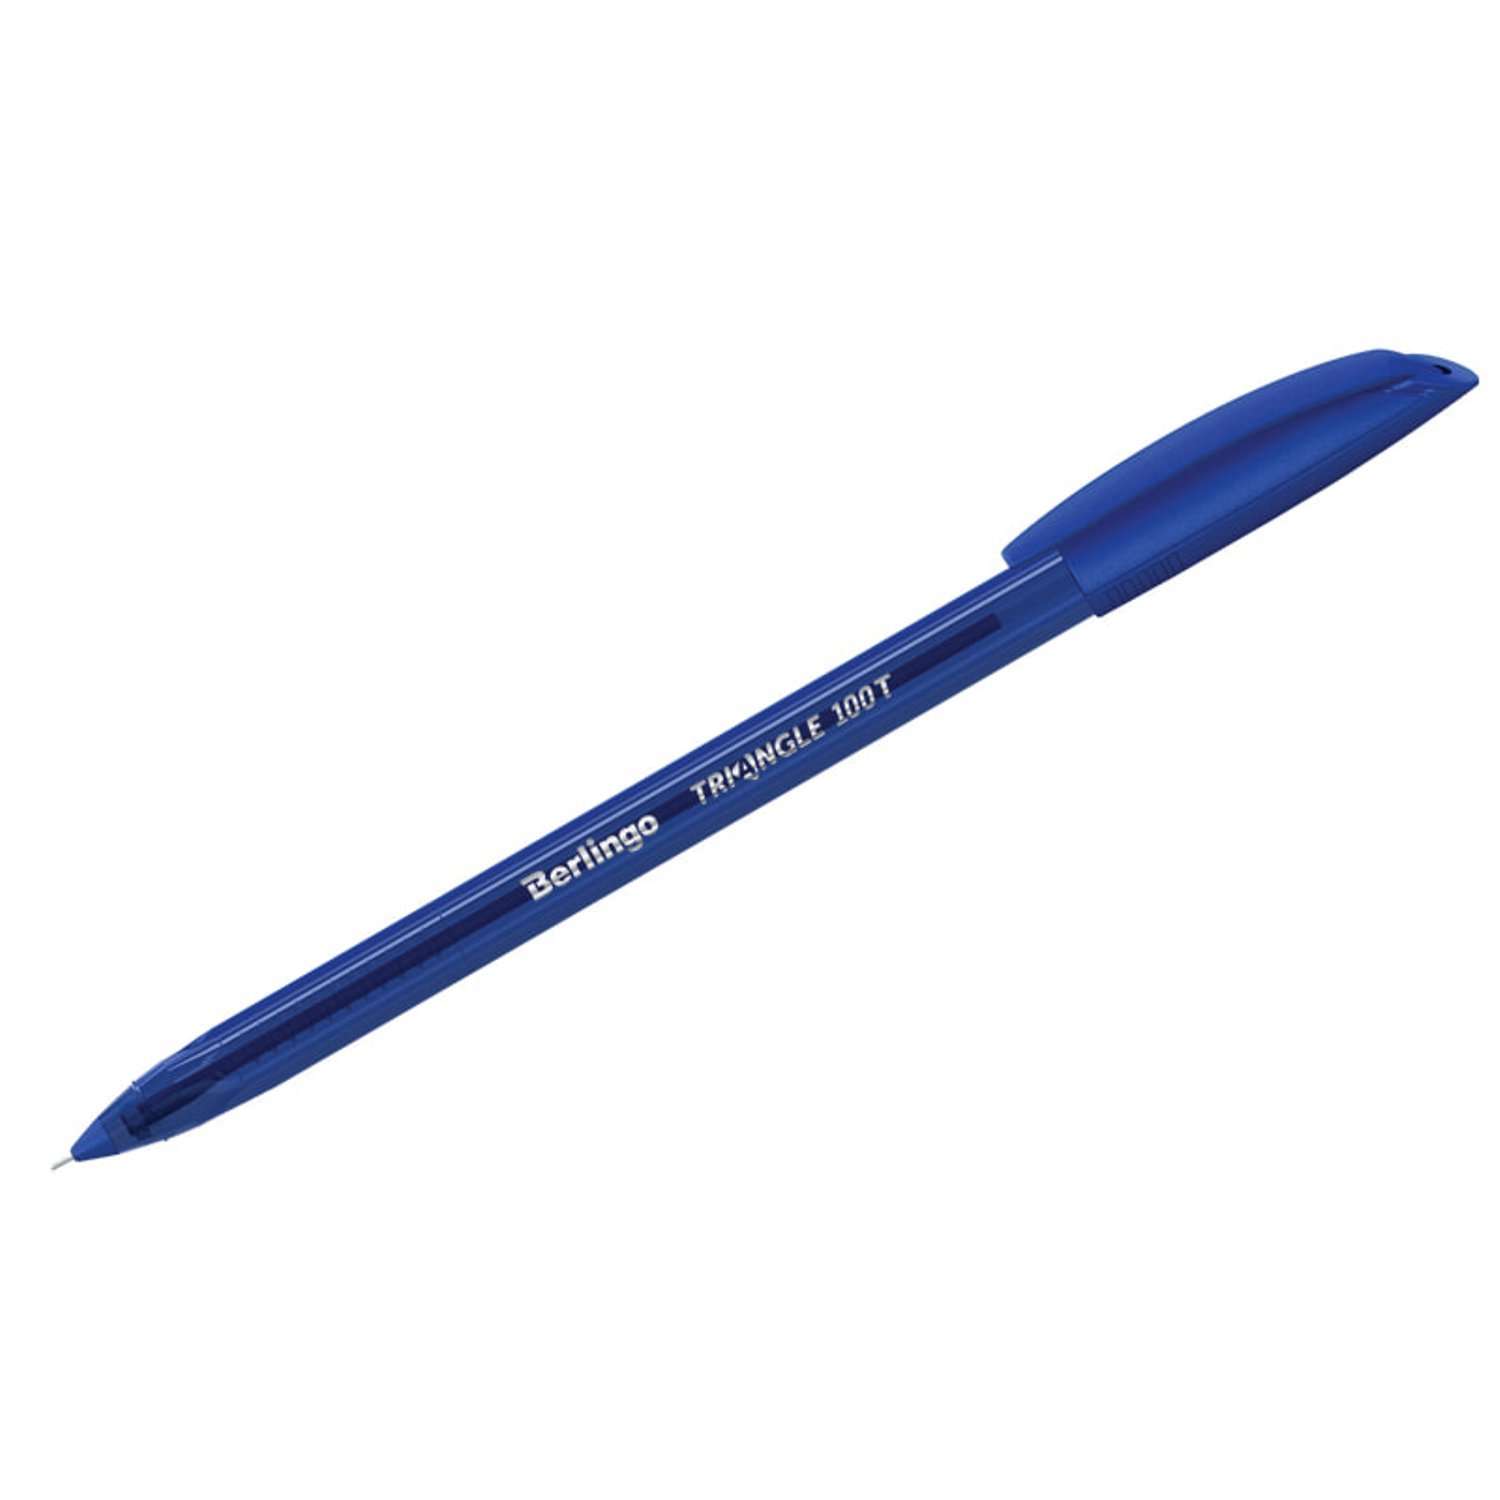 Ручка шариковая BERLINGO Triangle 100T 0.7мм Синяя CBp_07105 - фото 1